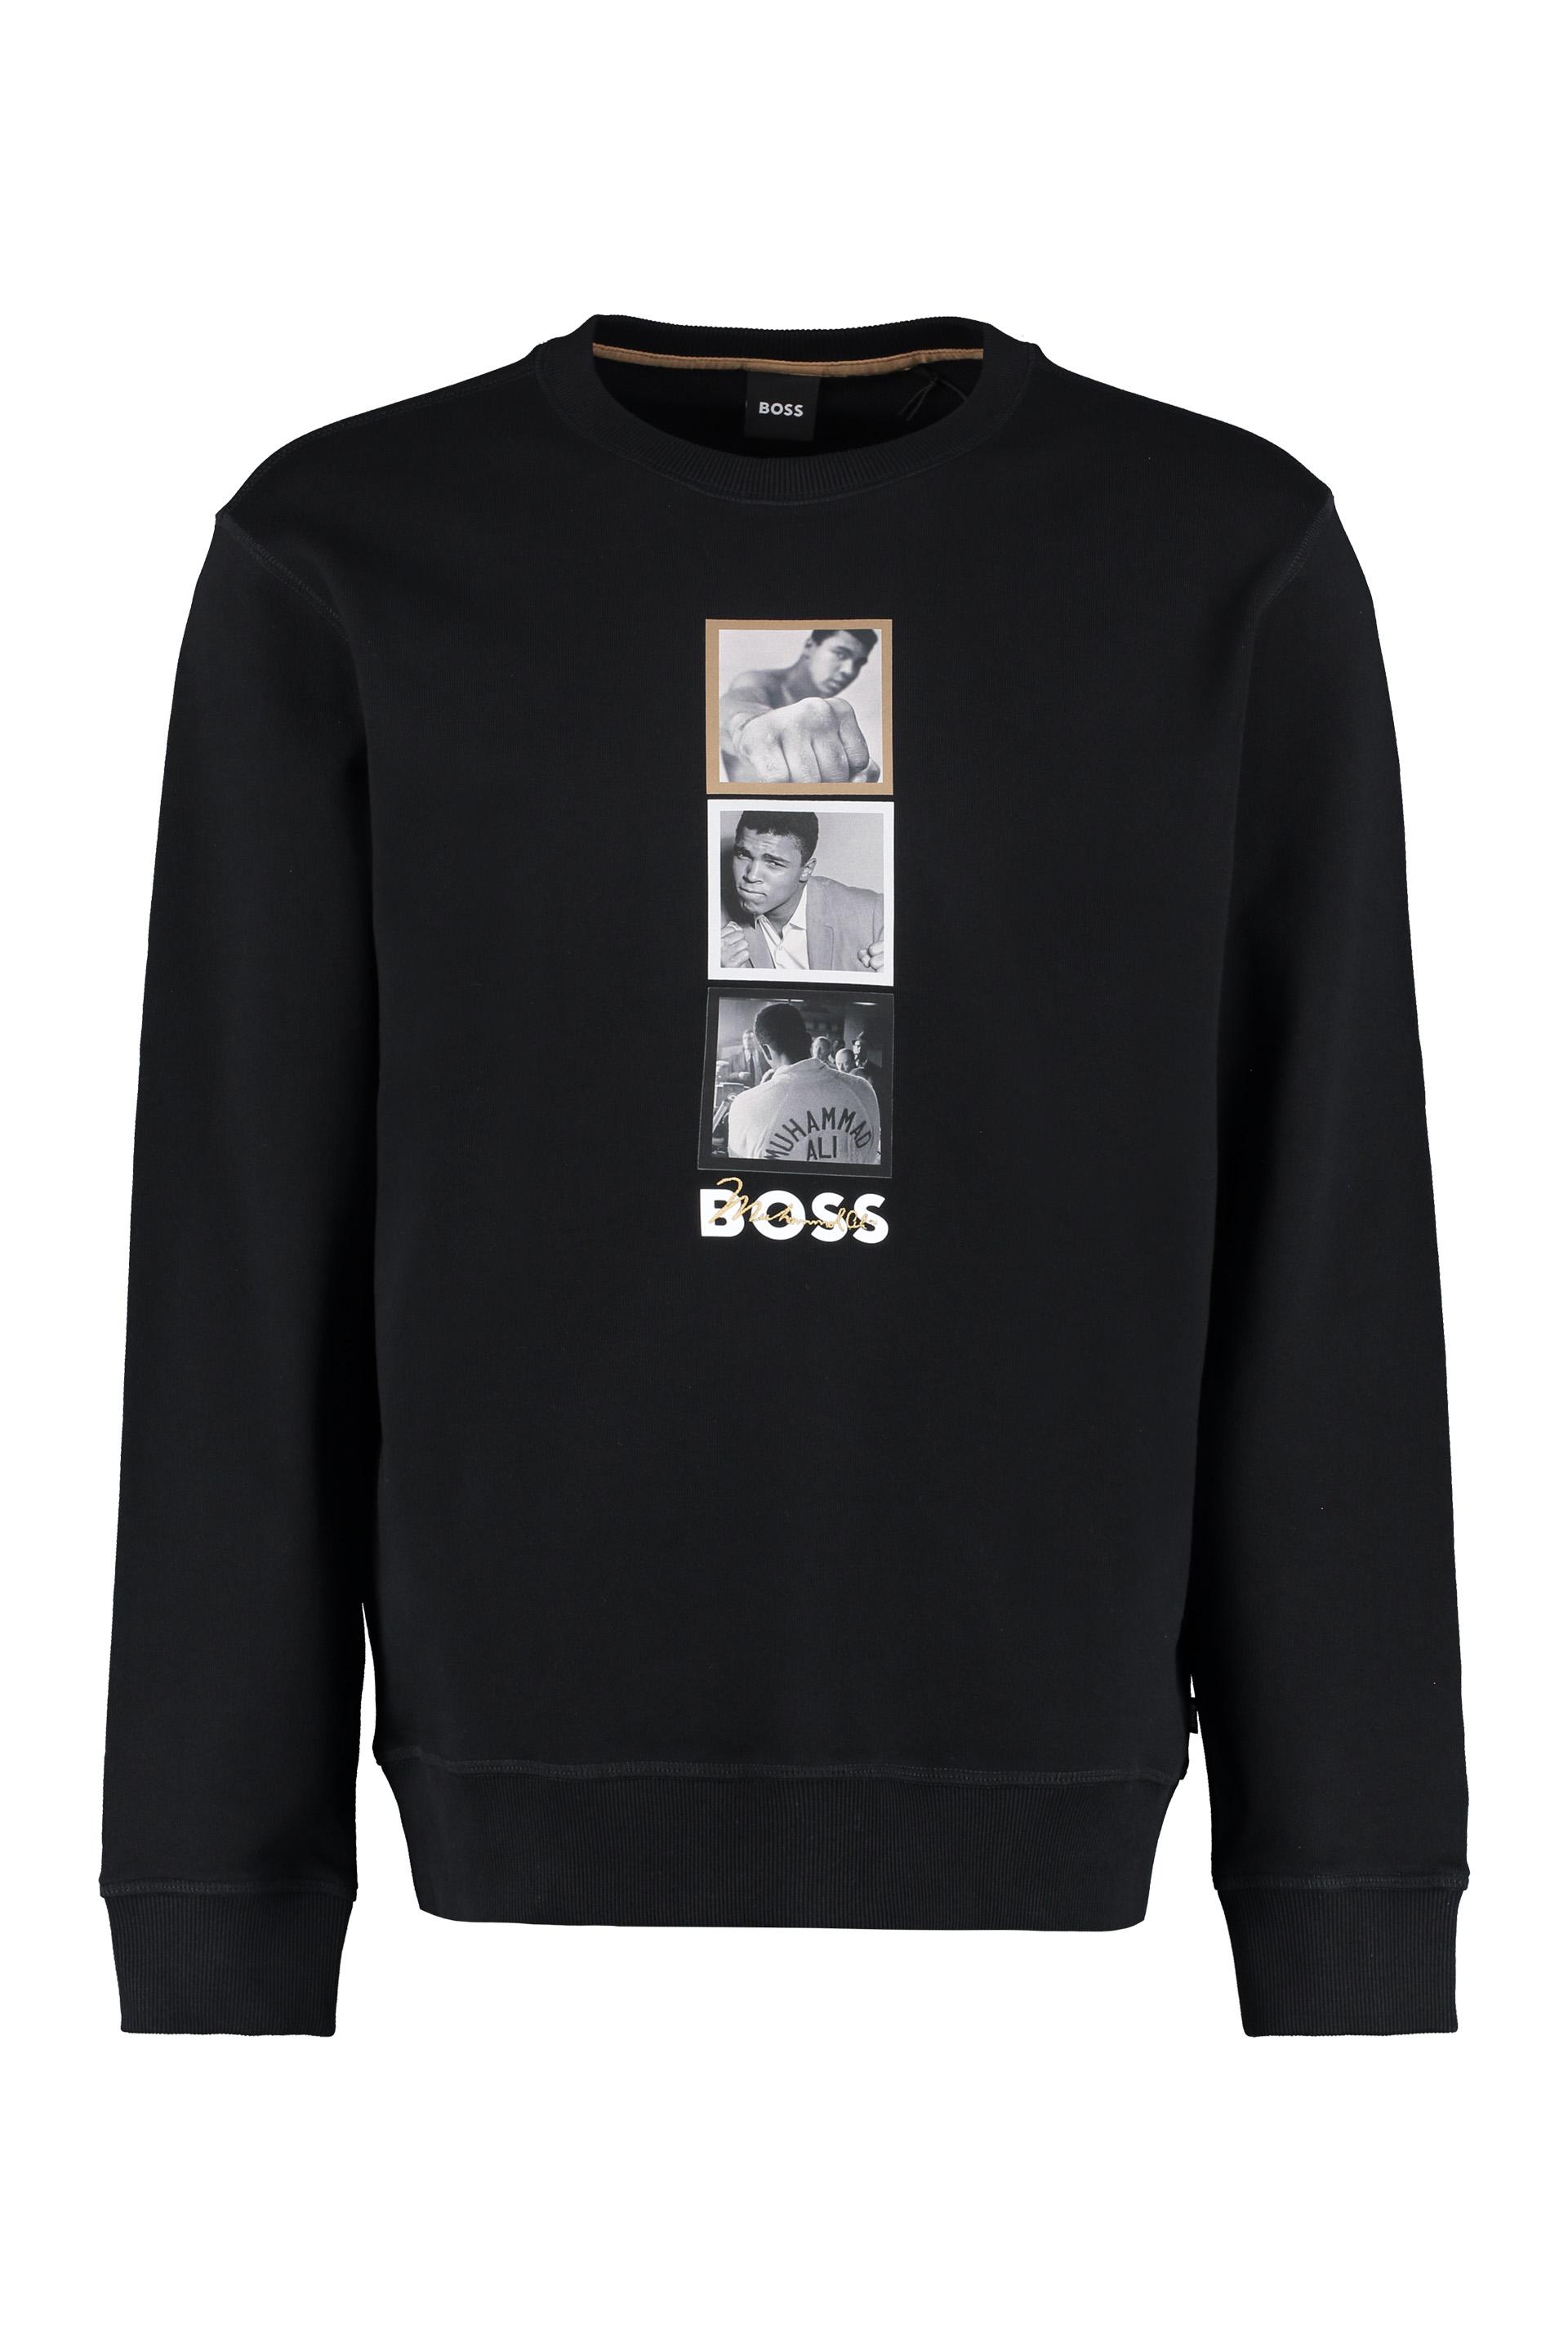 BOSS by HUGO BOSS X Muhammad Ali - Printed Cotton Sweatshirt in Black for  Men | Lyst